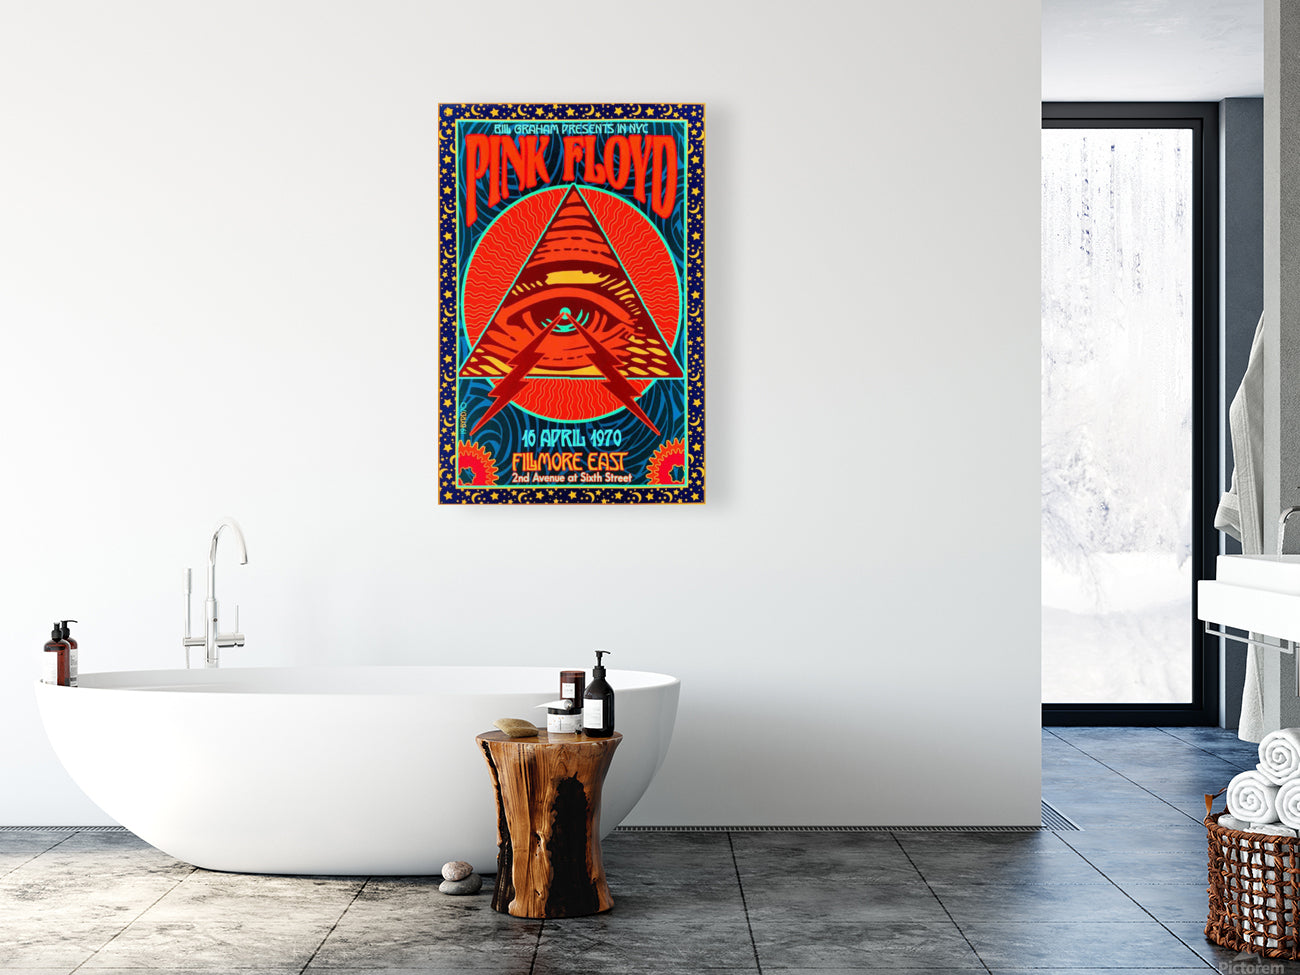 Pink Floyd Concert Vintage Marquee  Poster